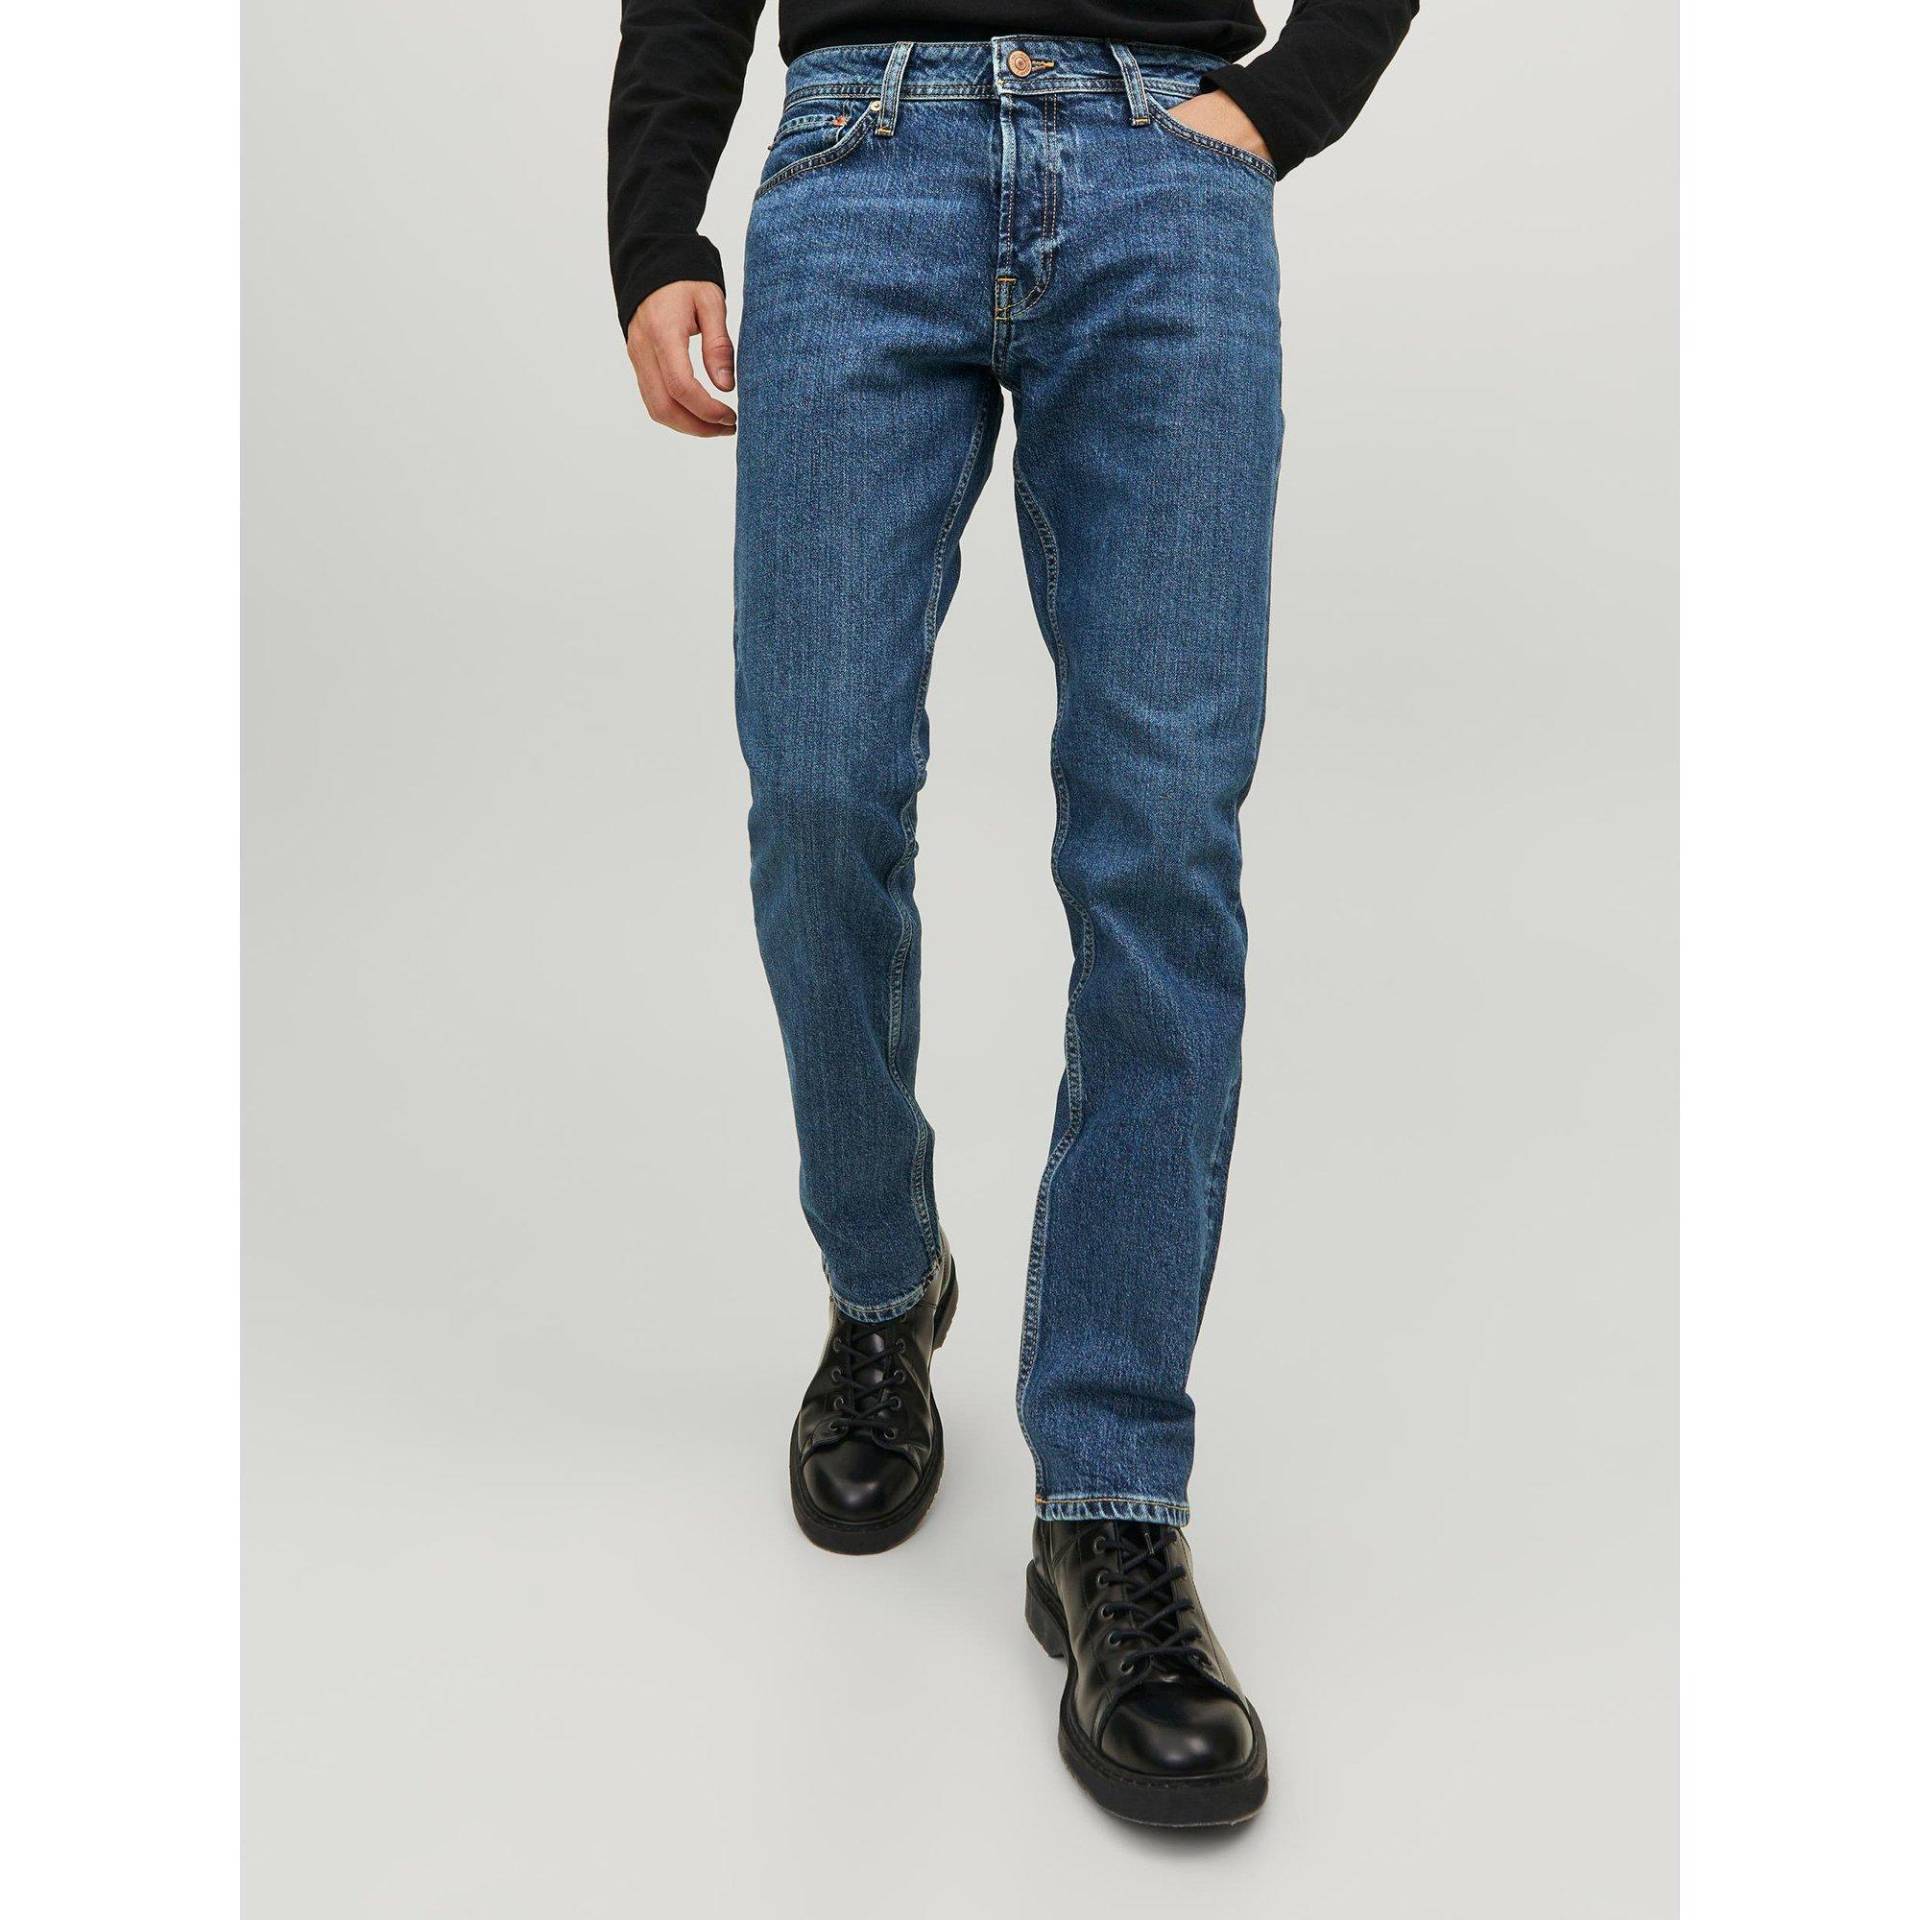 Jeans, Slim Fit Herren Blau Denim L32/W31 von JACK & JONES